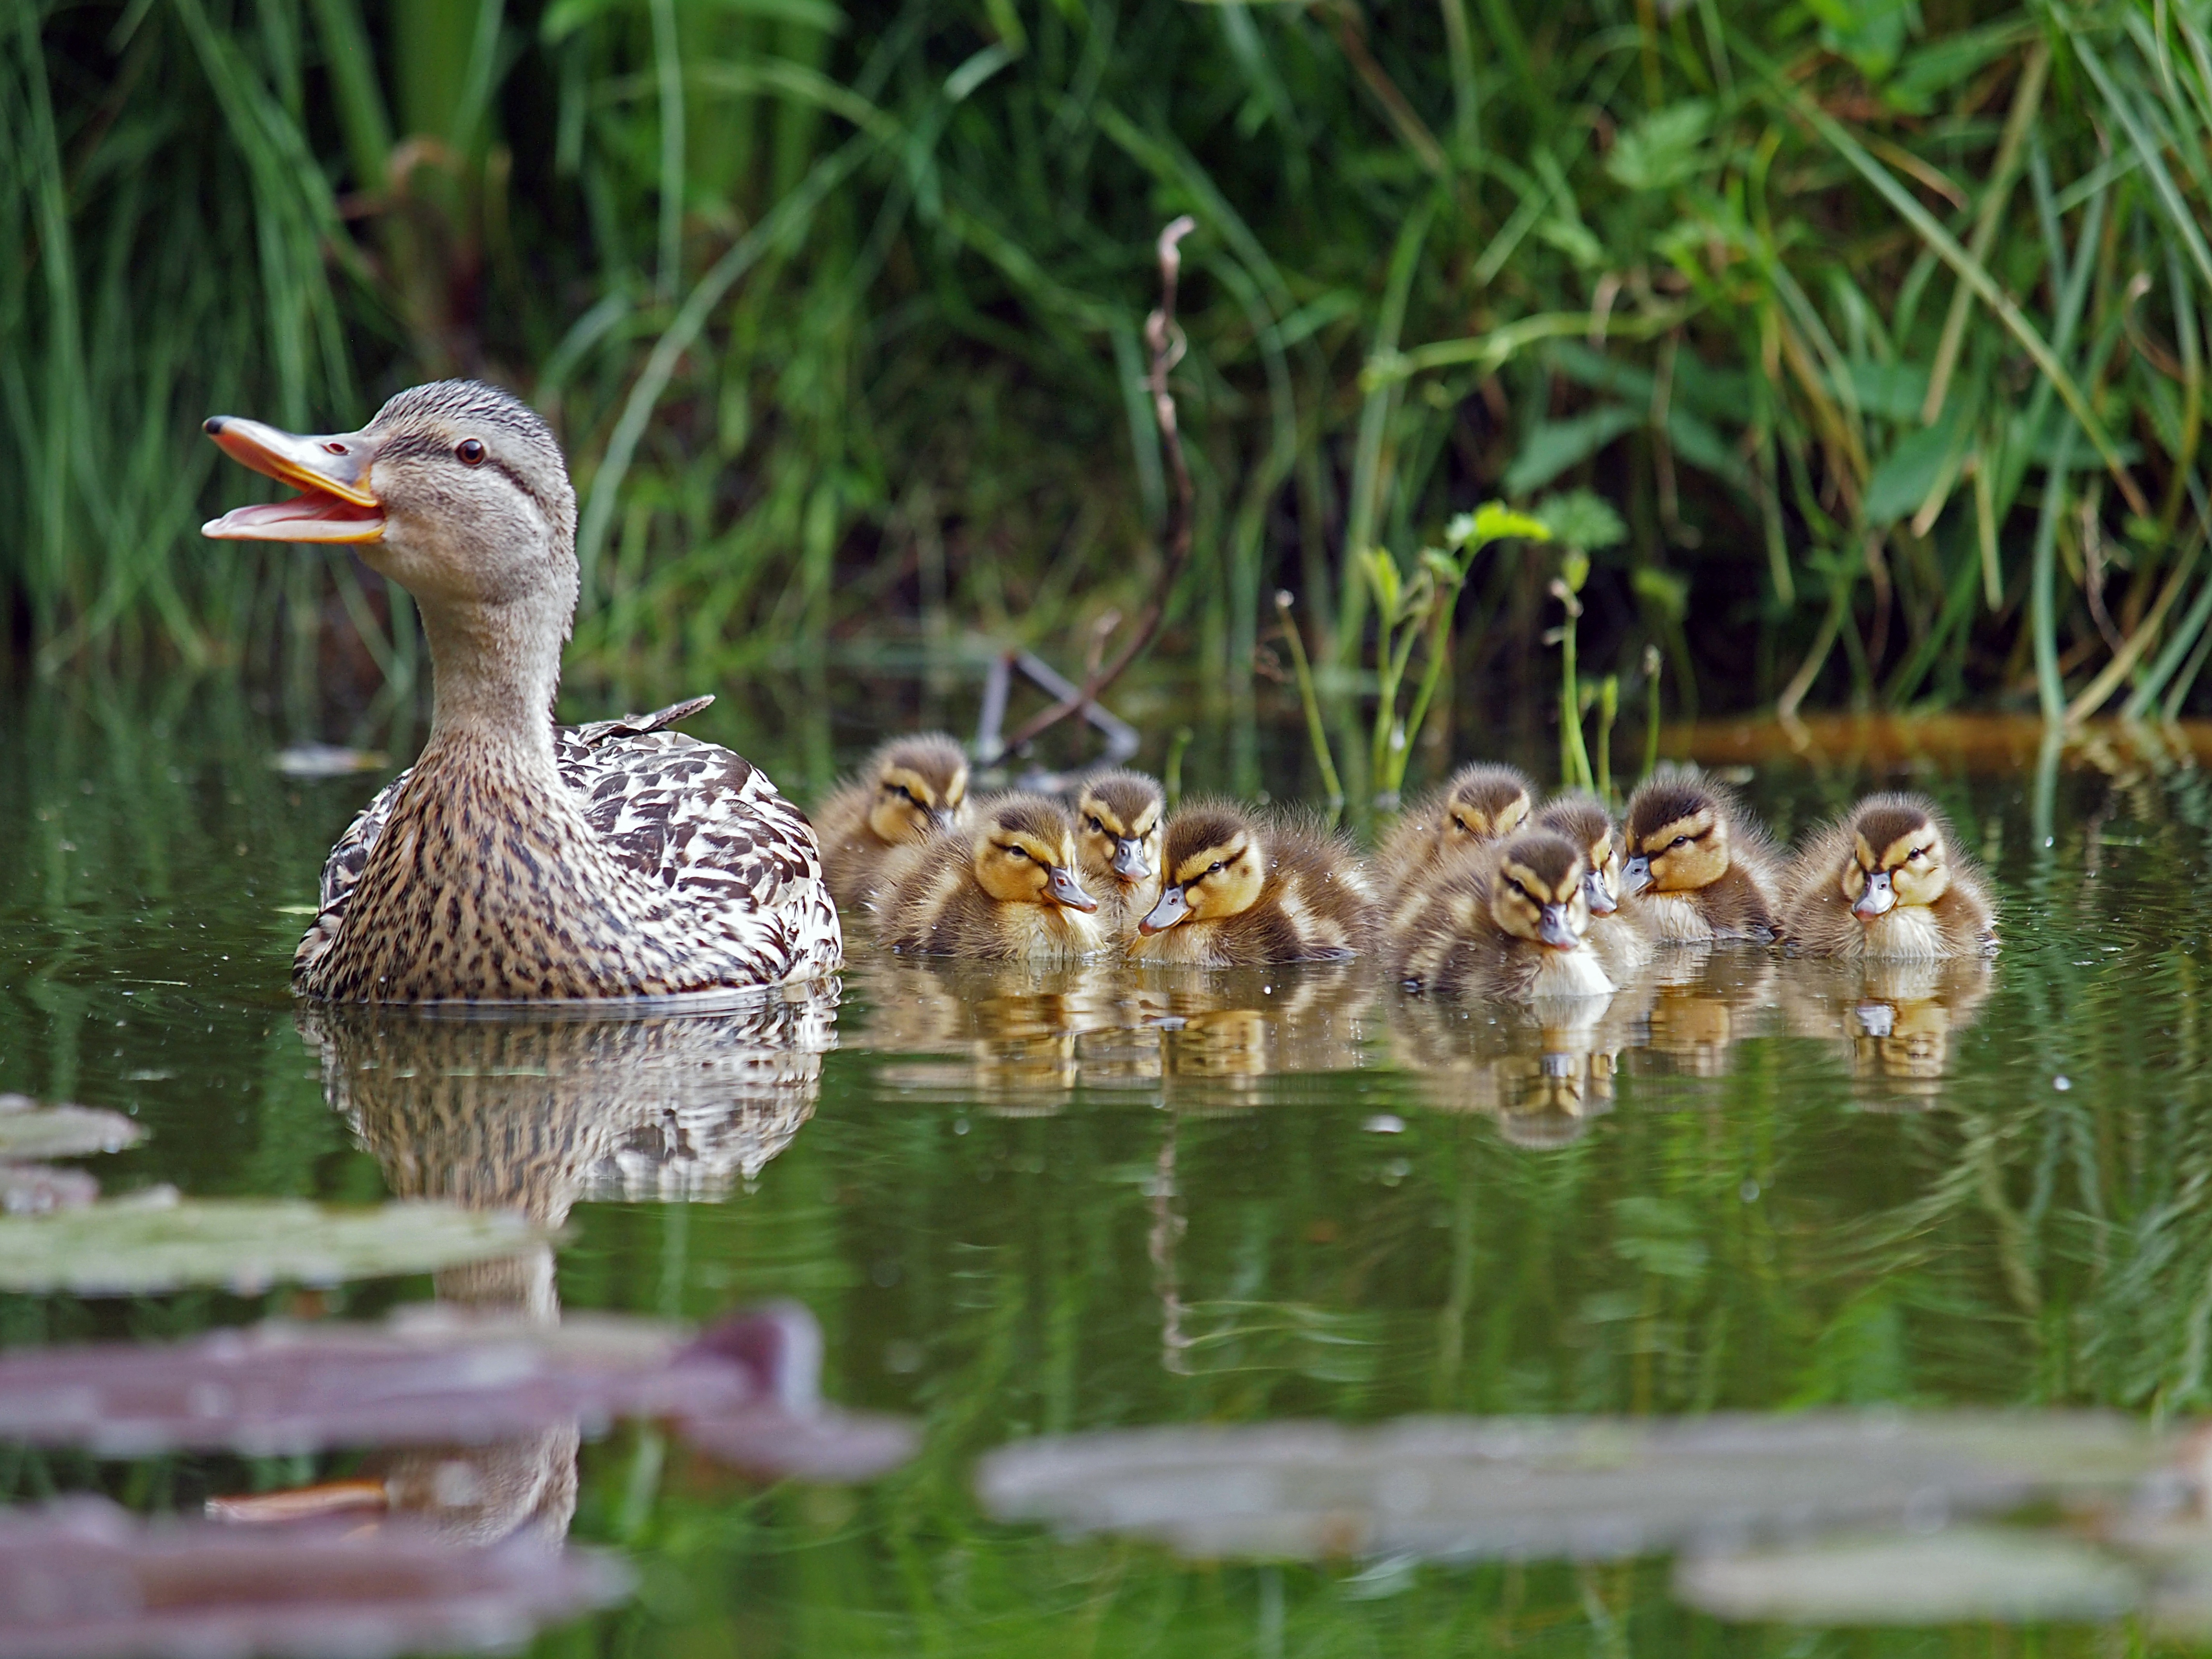 Baby ducks following Mama duck